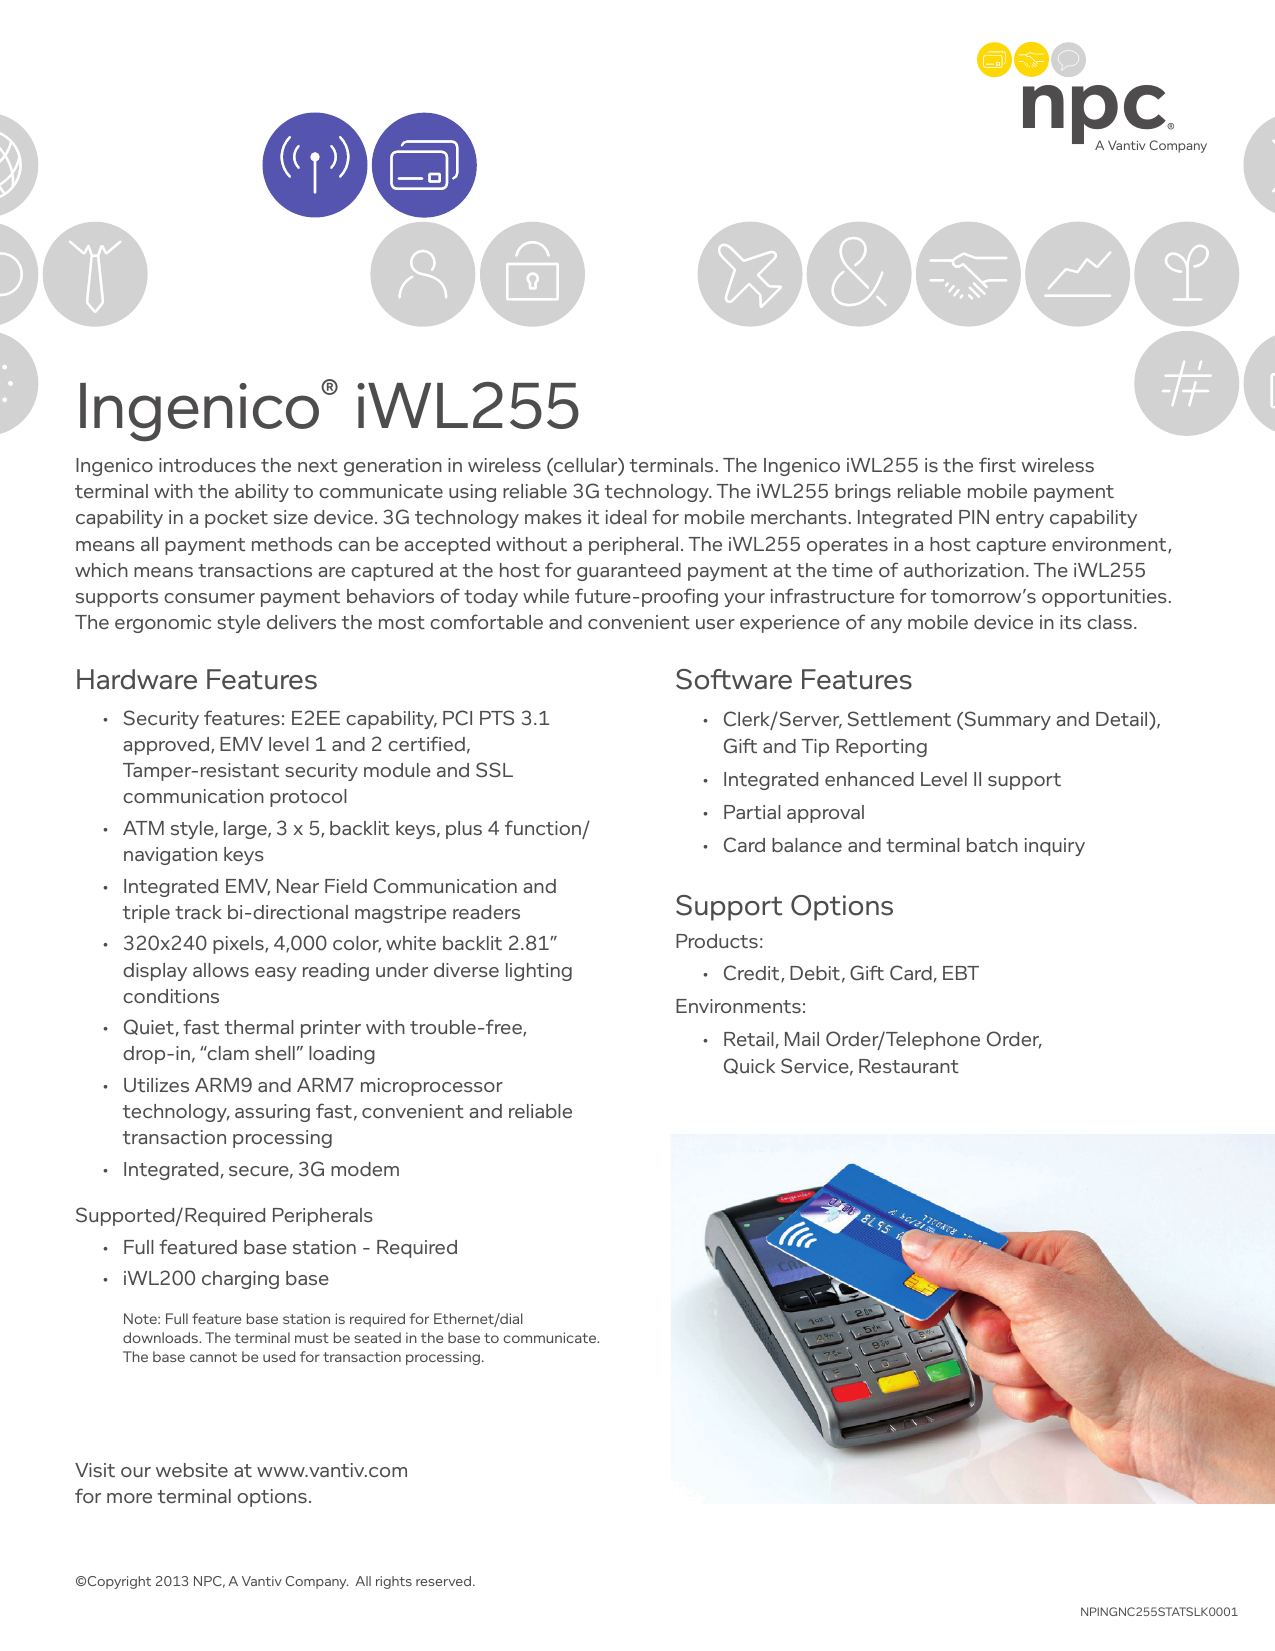 Ingenico iWL255 3G Wireless Terminal and Base/Docking Station